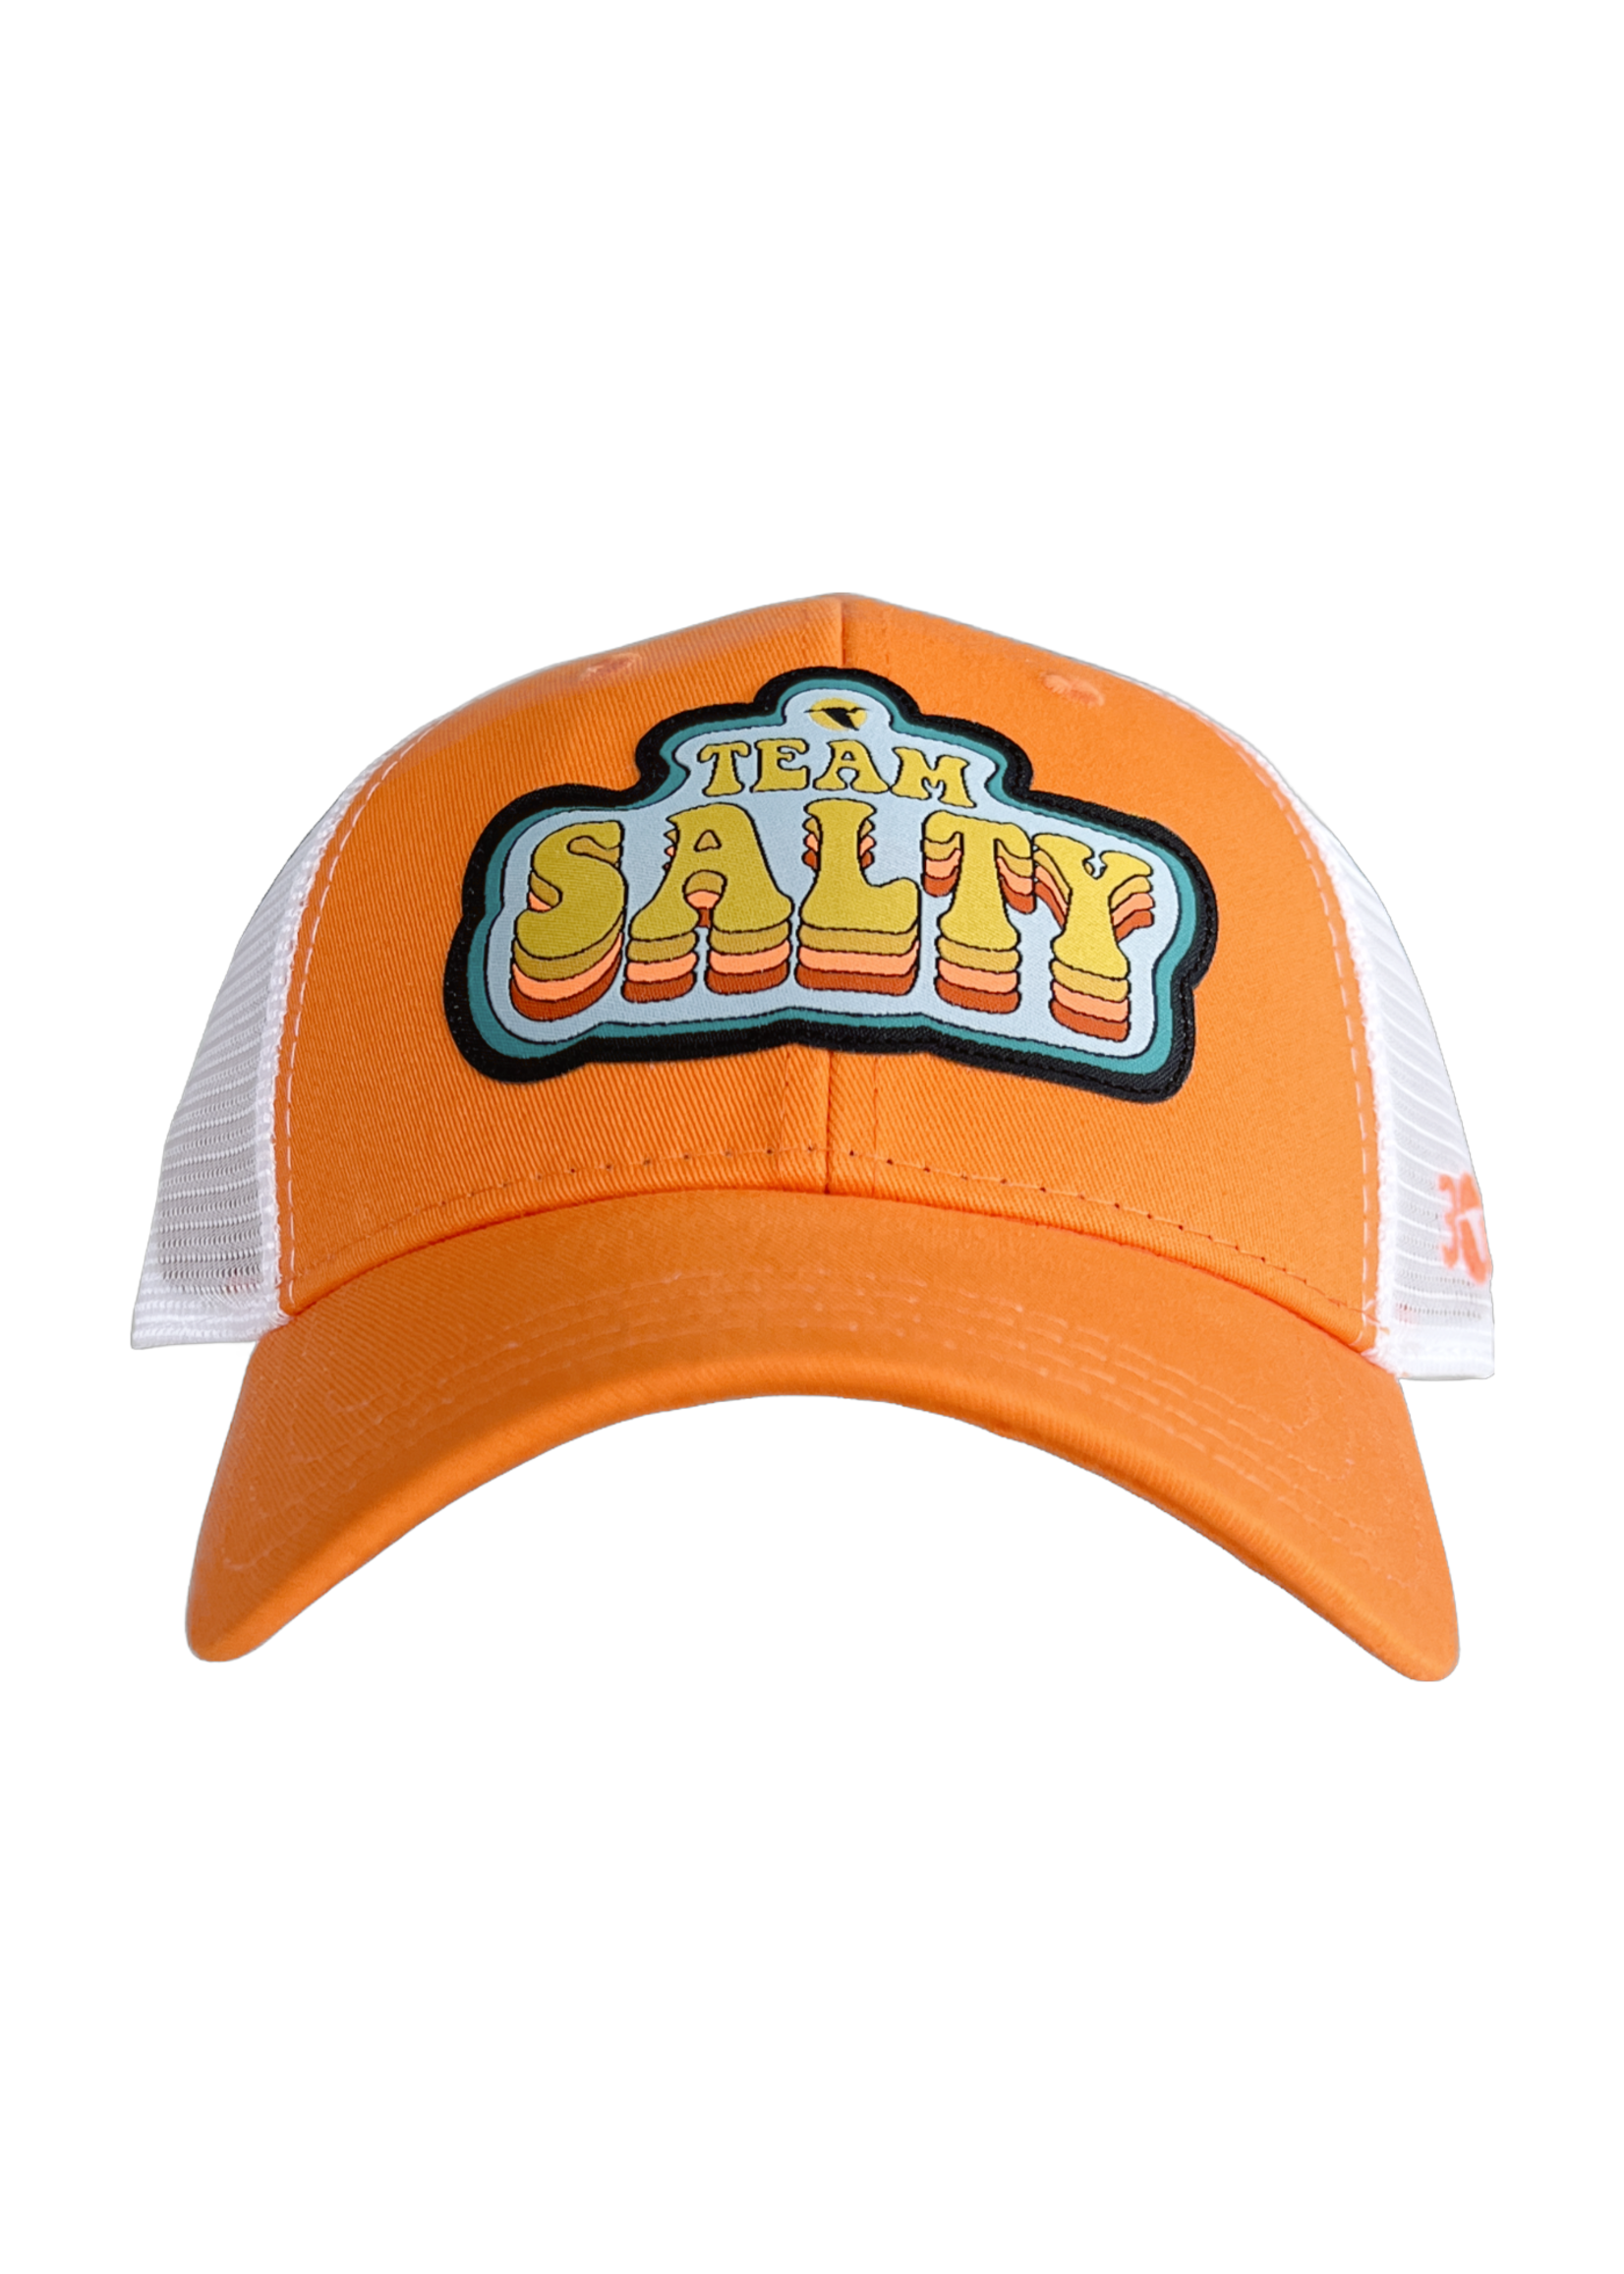 Team Salty Team Salty Retro Hat